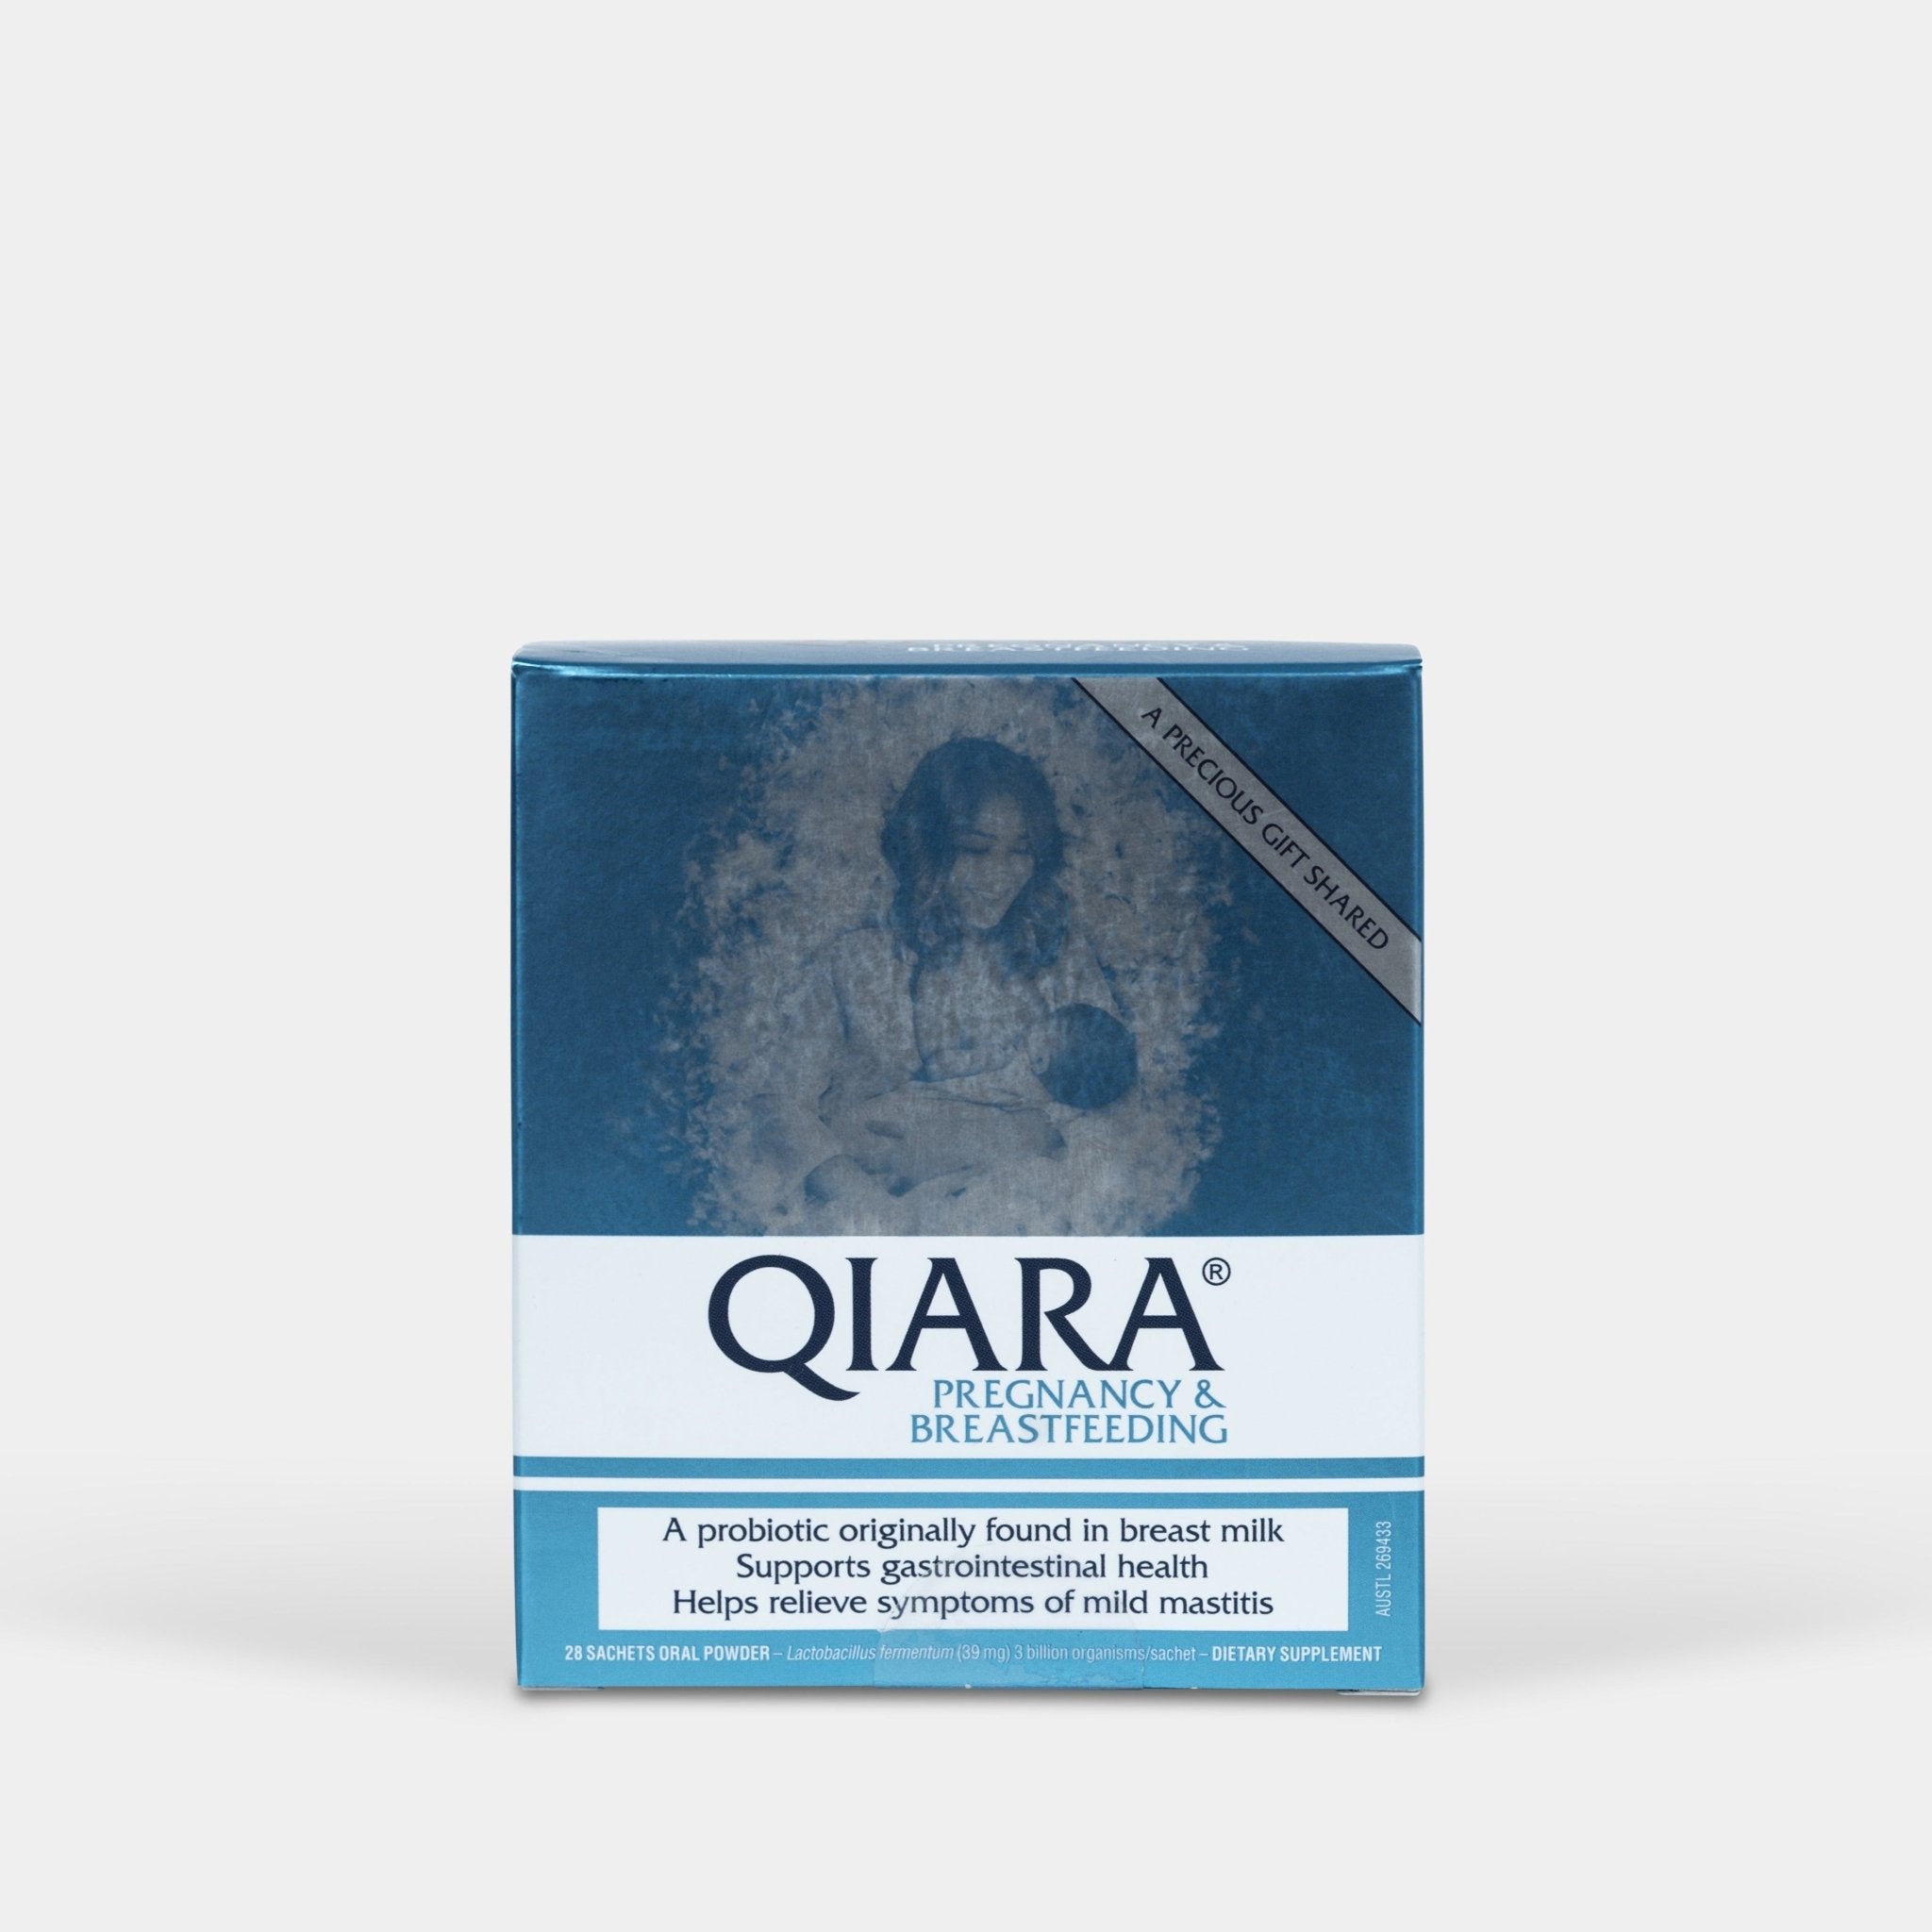 Qiara Pregnancy & Breastfeeding - The Birth Store-Qiara